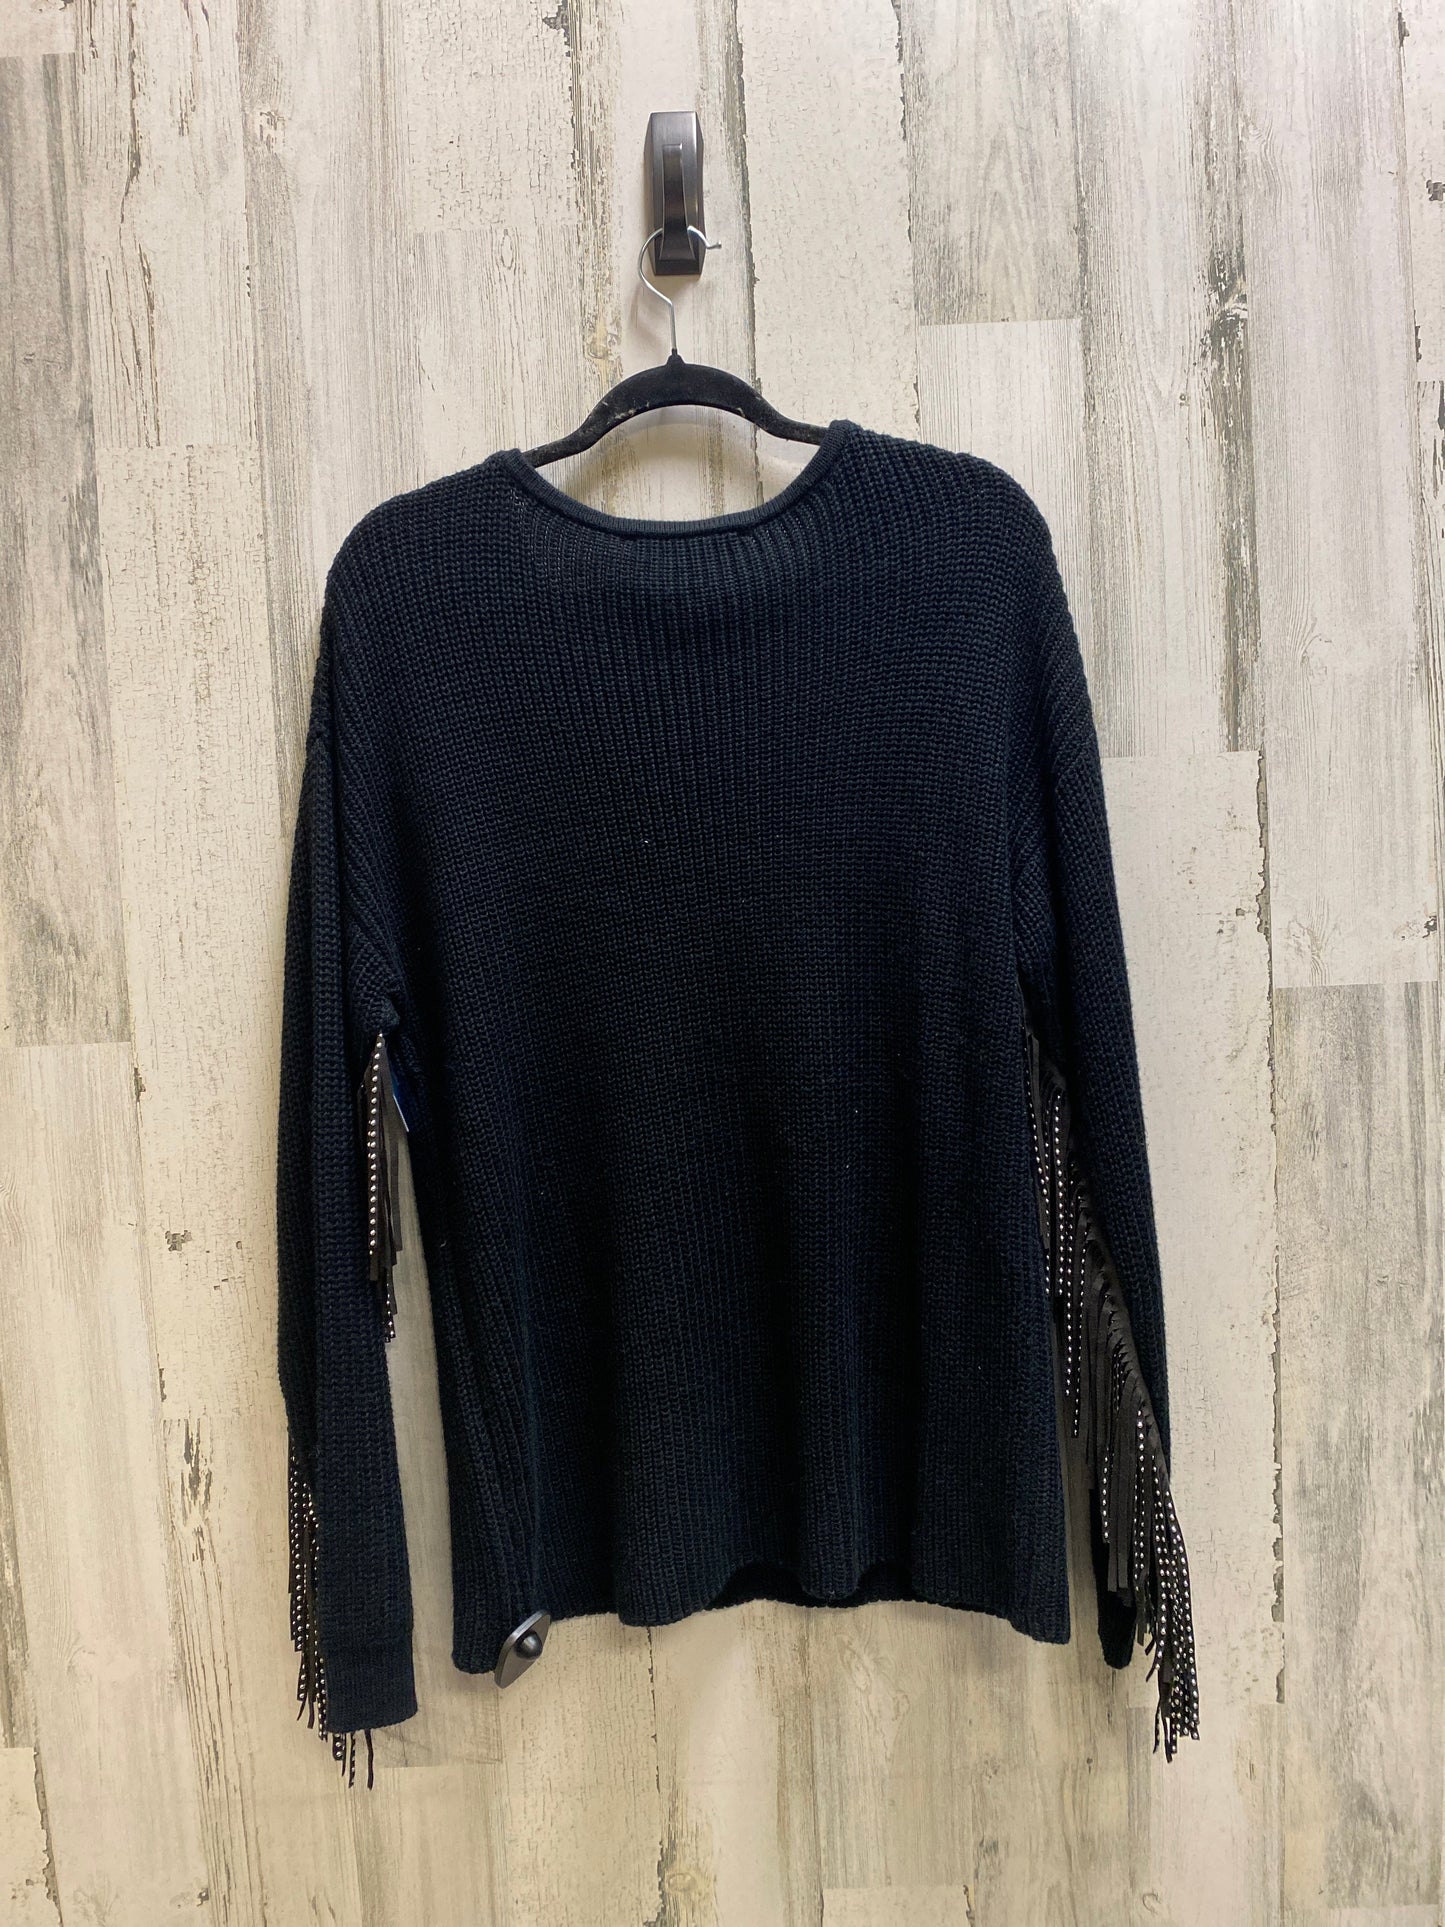 Sweater By Ashley Stewart  Size: Xl